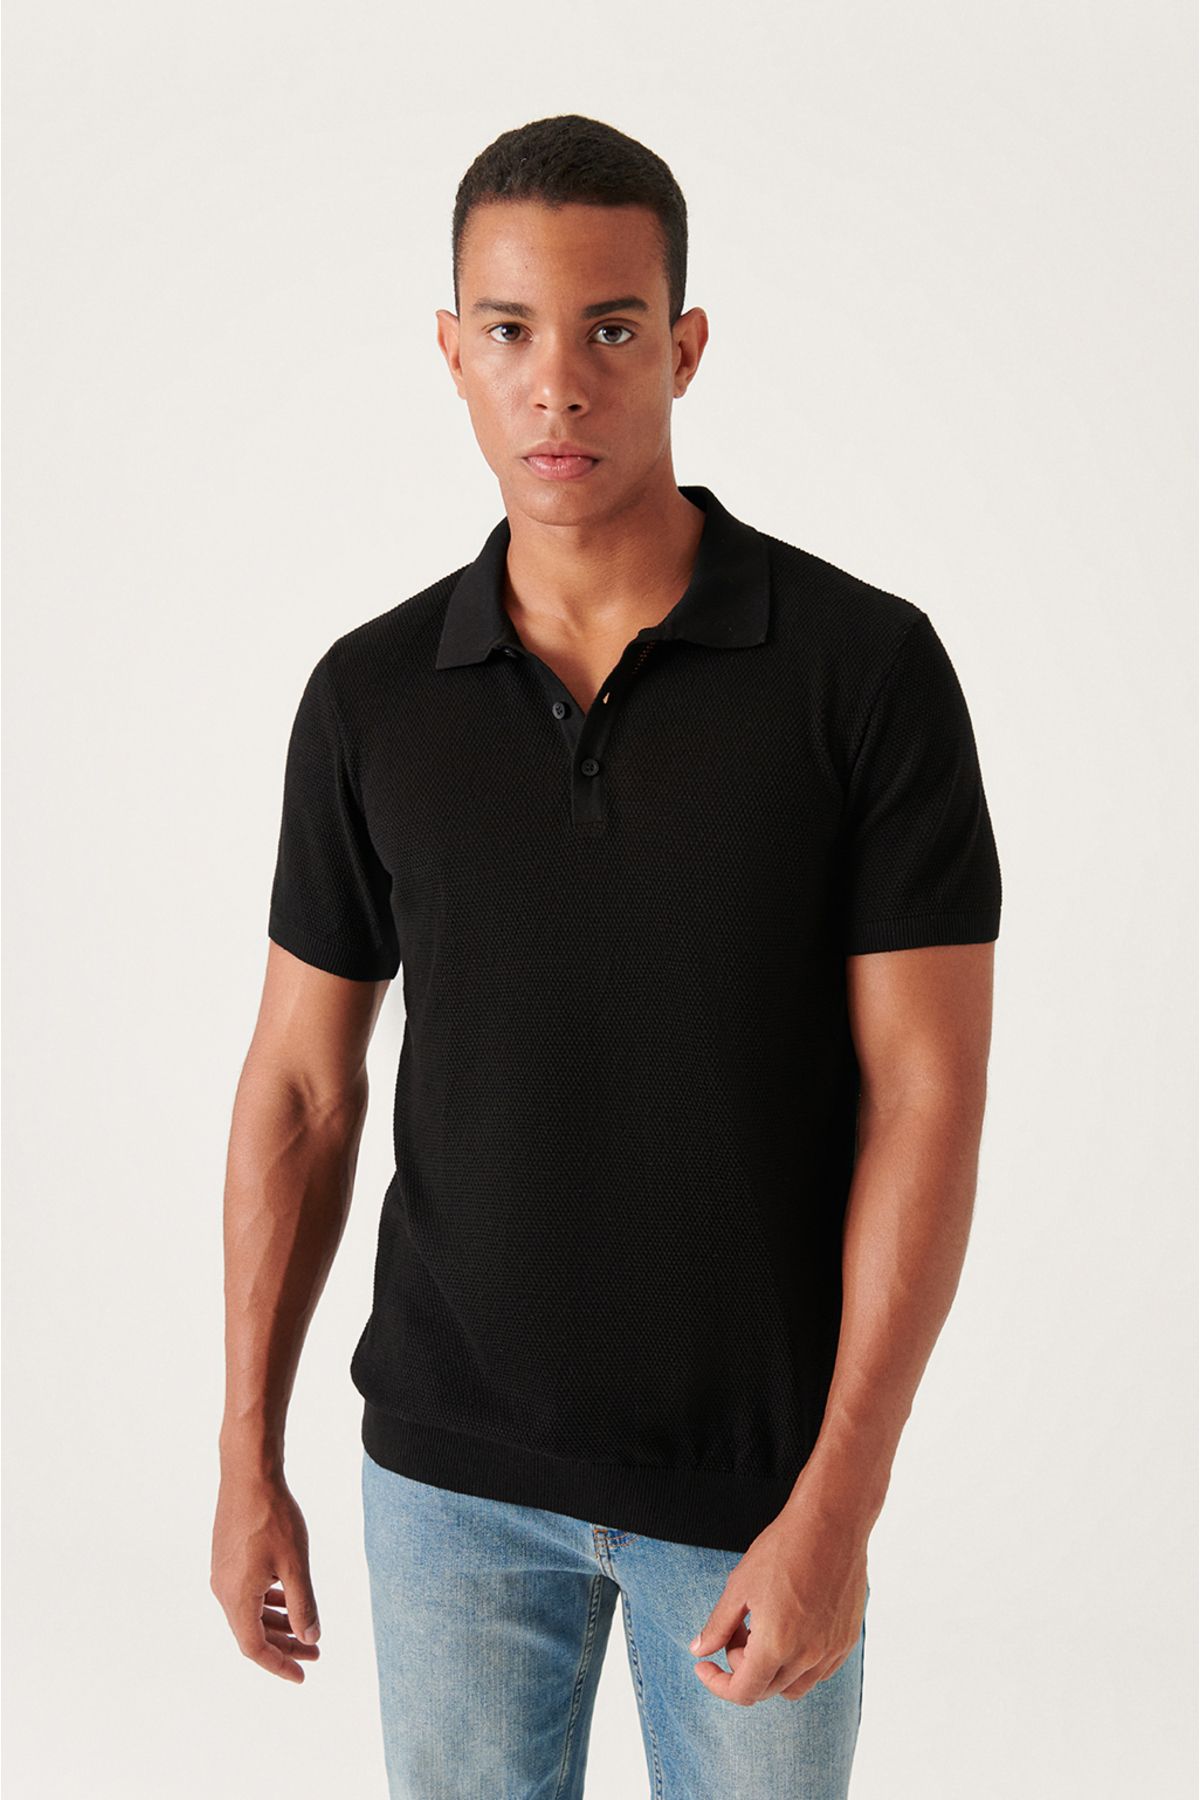 Avva تی شرت بافتنی مردانه یقه چوگان مشکی با بافت استاندارد برش معمولی B005009